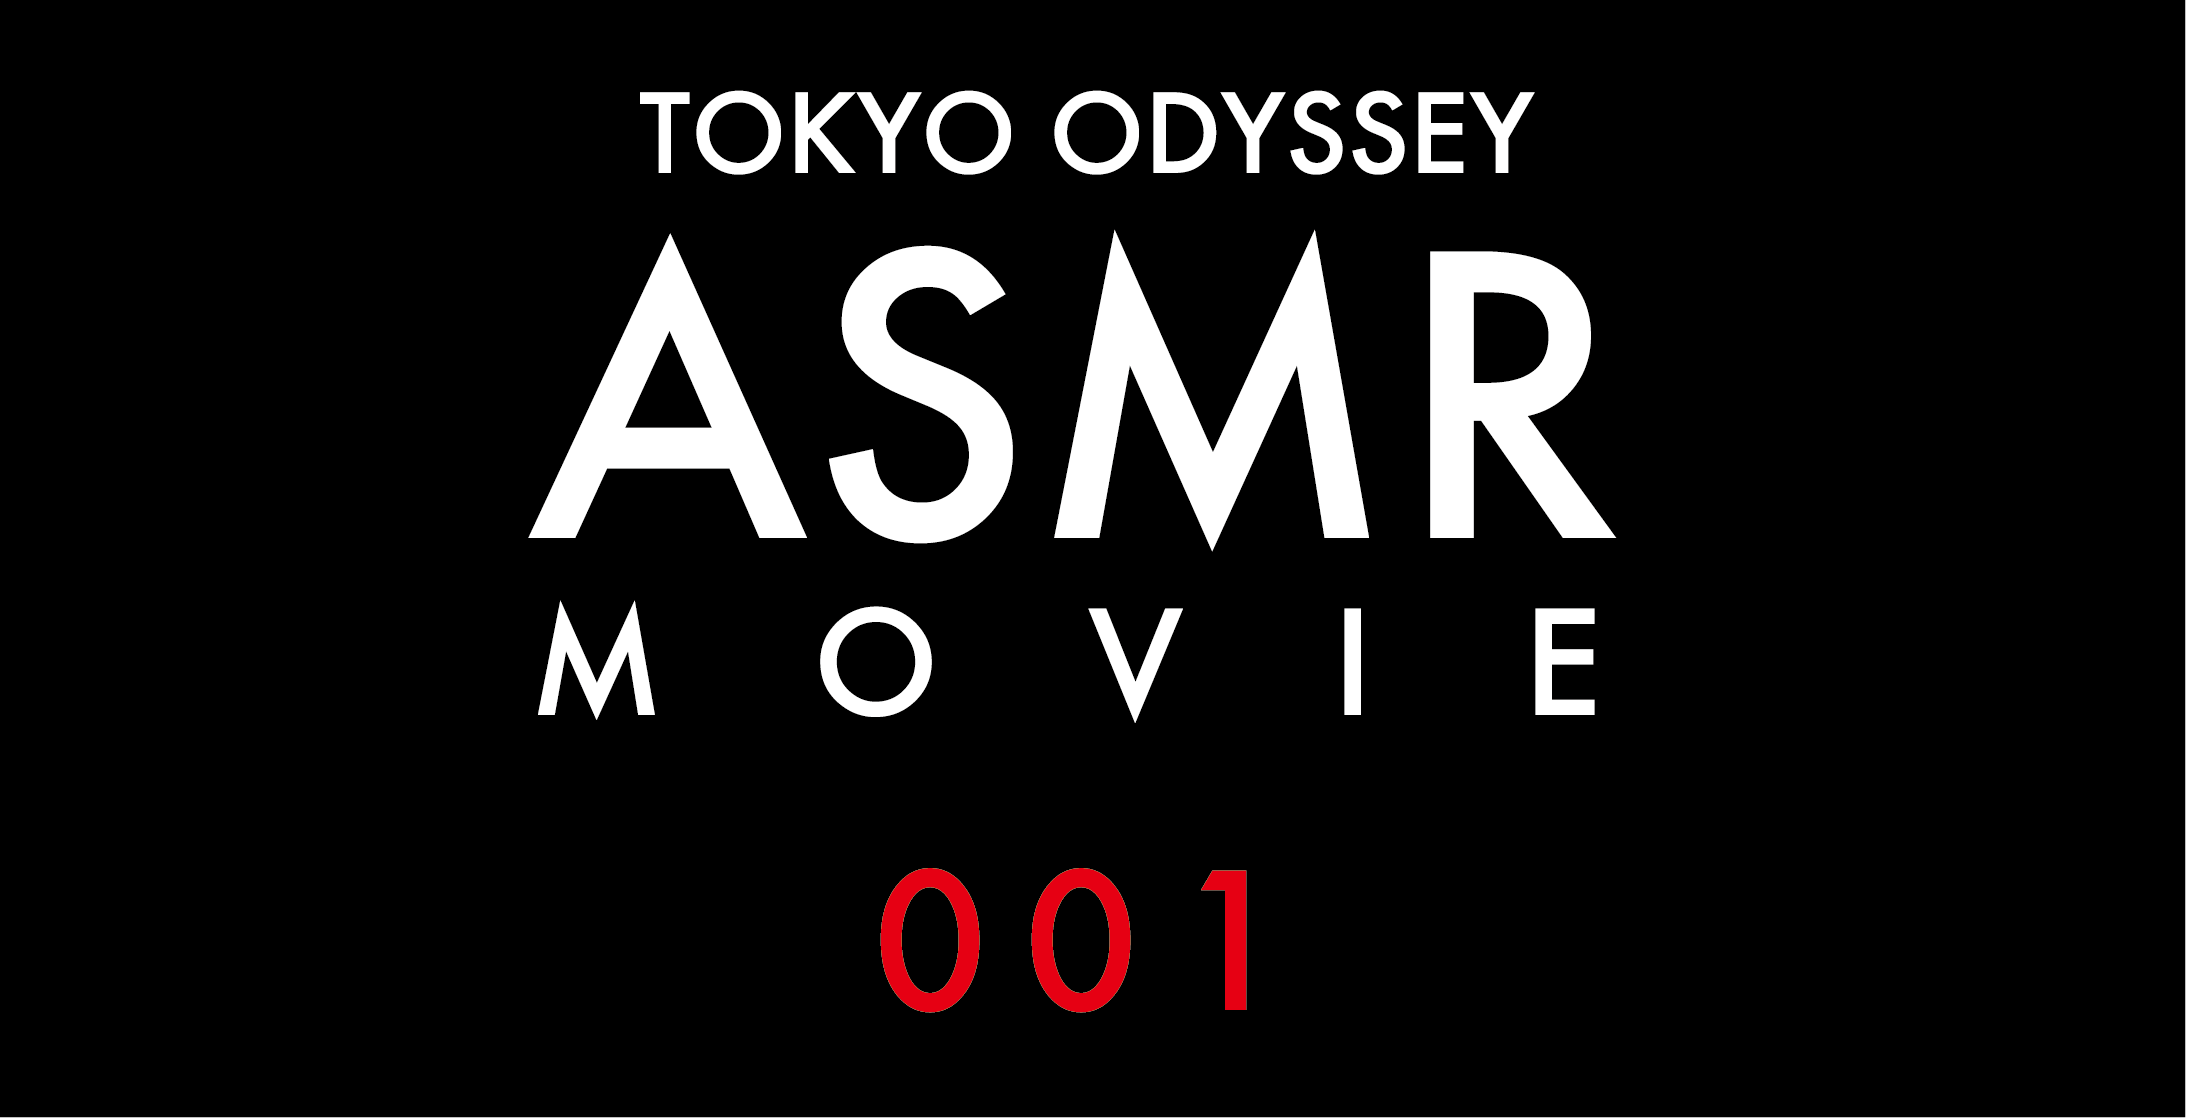 TOKYO ODYSSEY ASMR MOVIE 001.